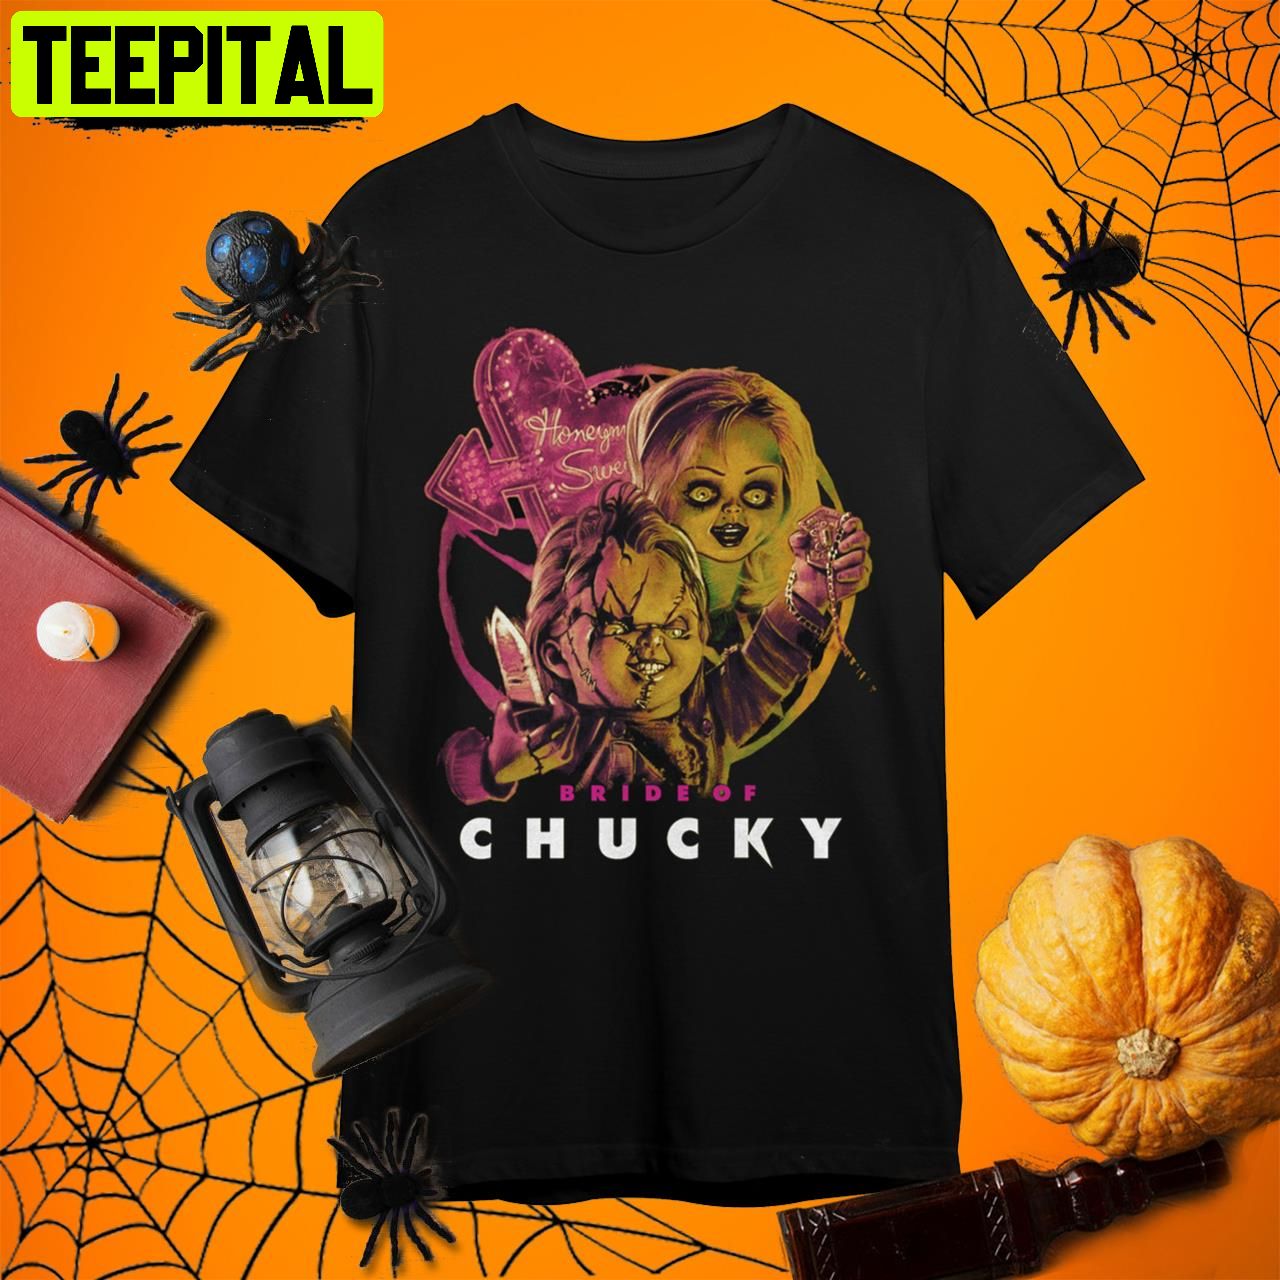 Bride Of Chucky Horror Movie Child's Play Retro Art Unisex T-Shirt